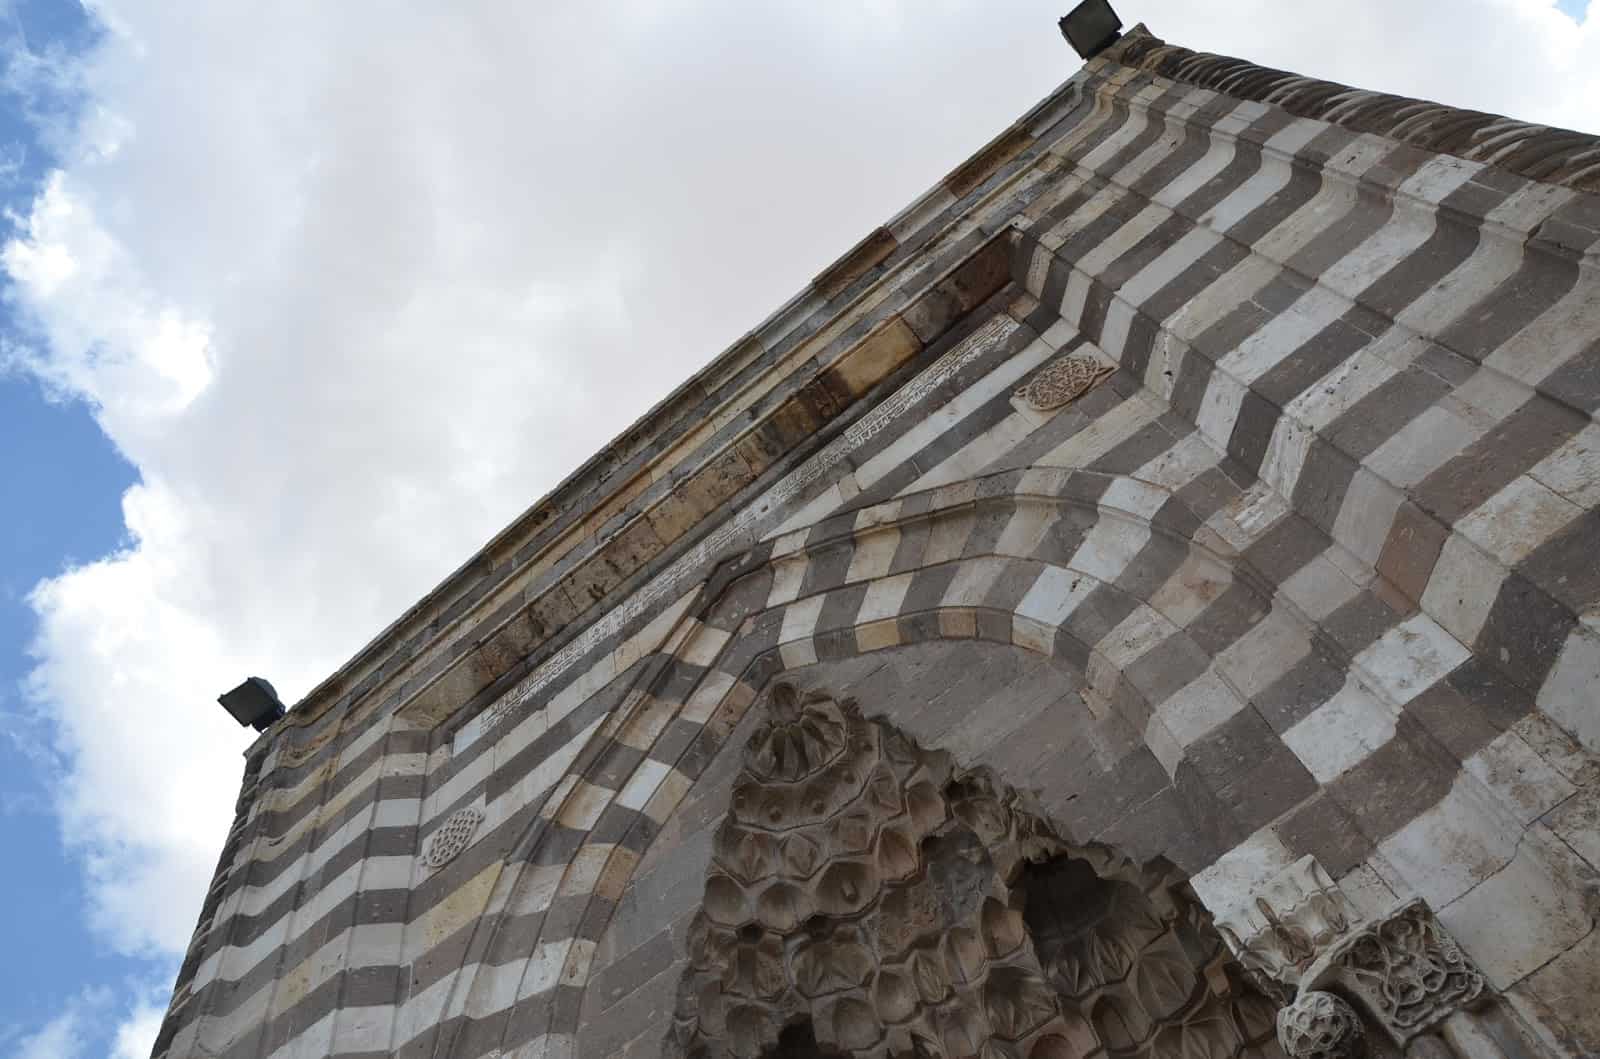 Cacabey Camii in Kırşehir, Turkey